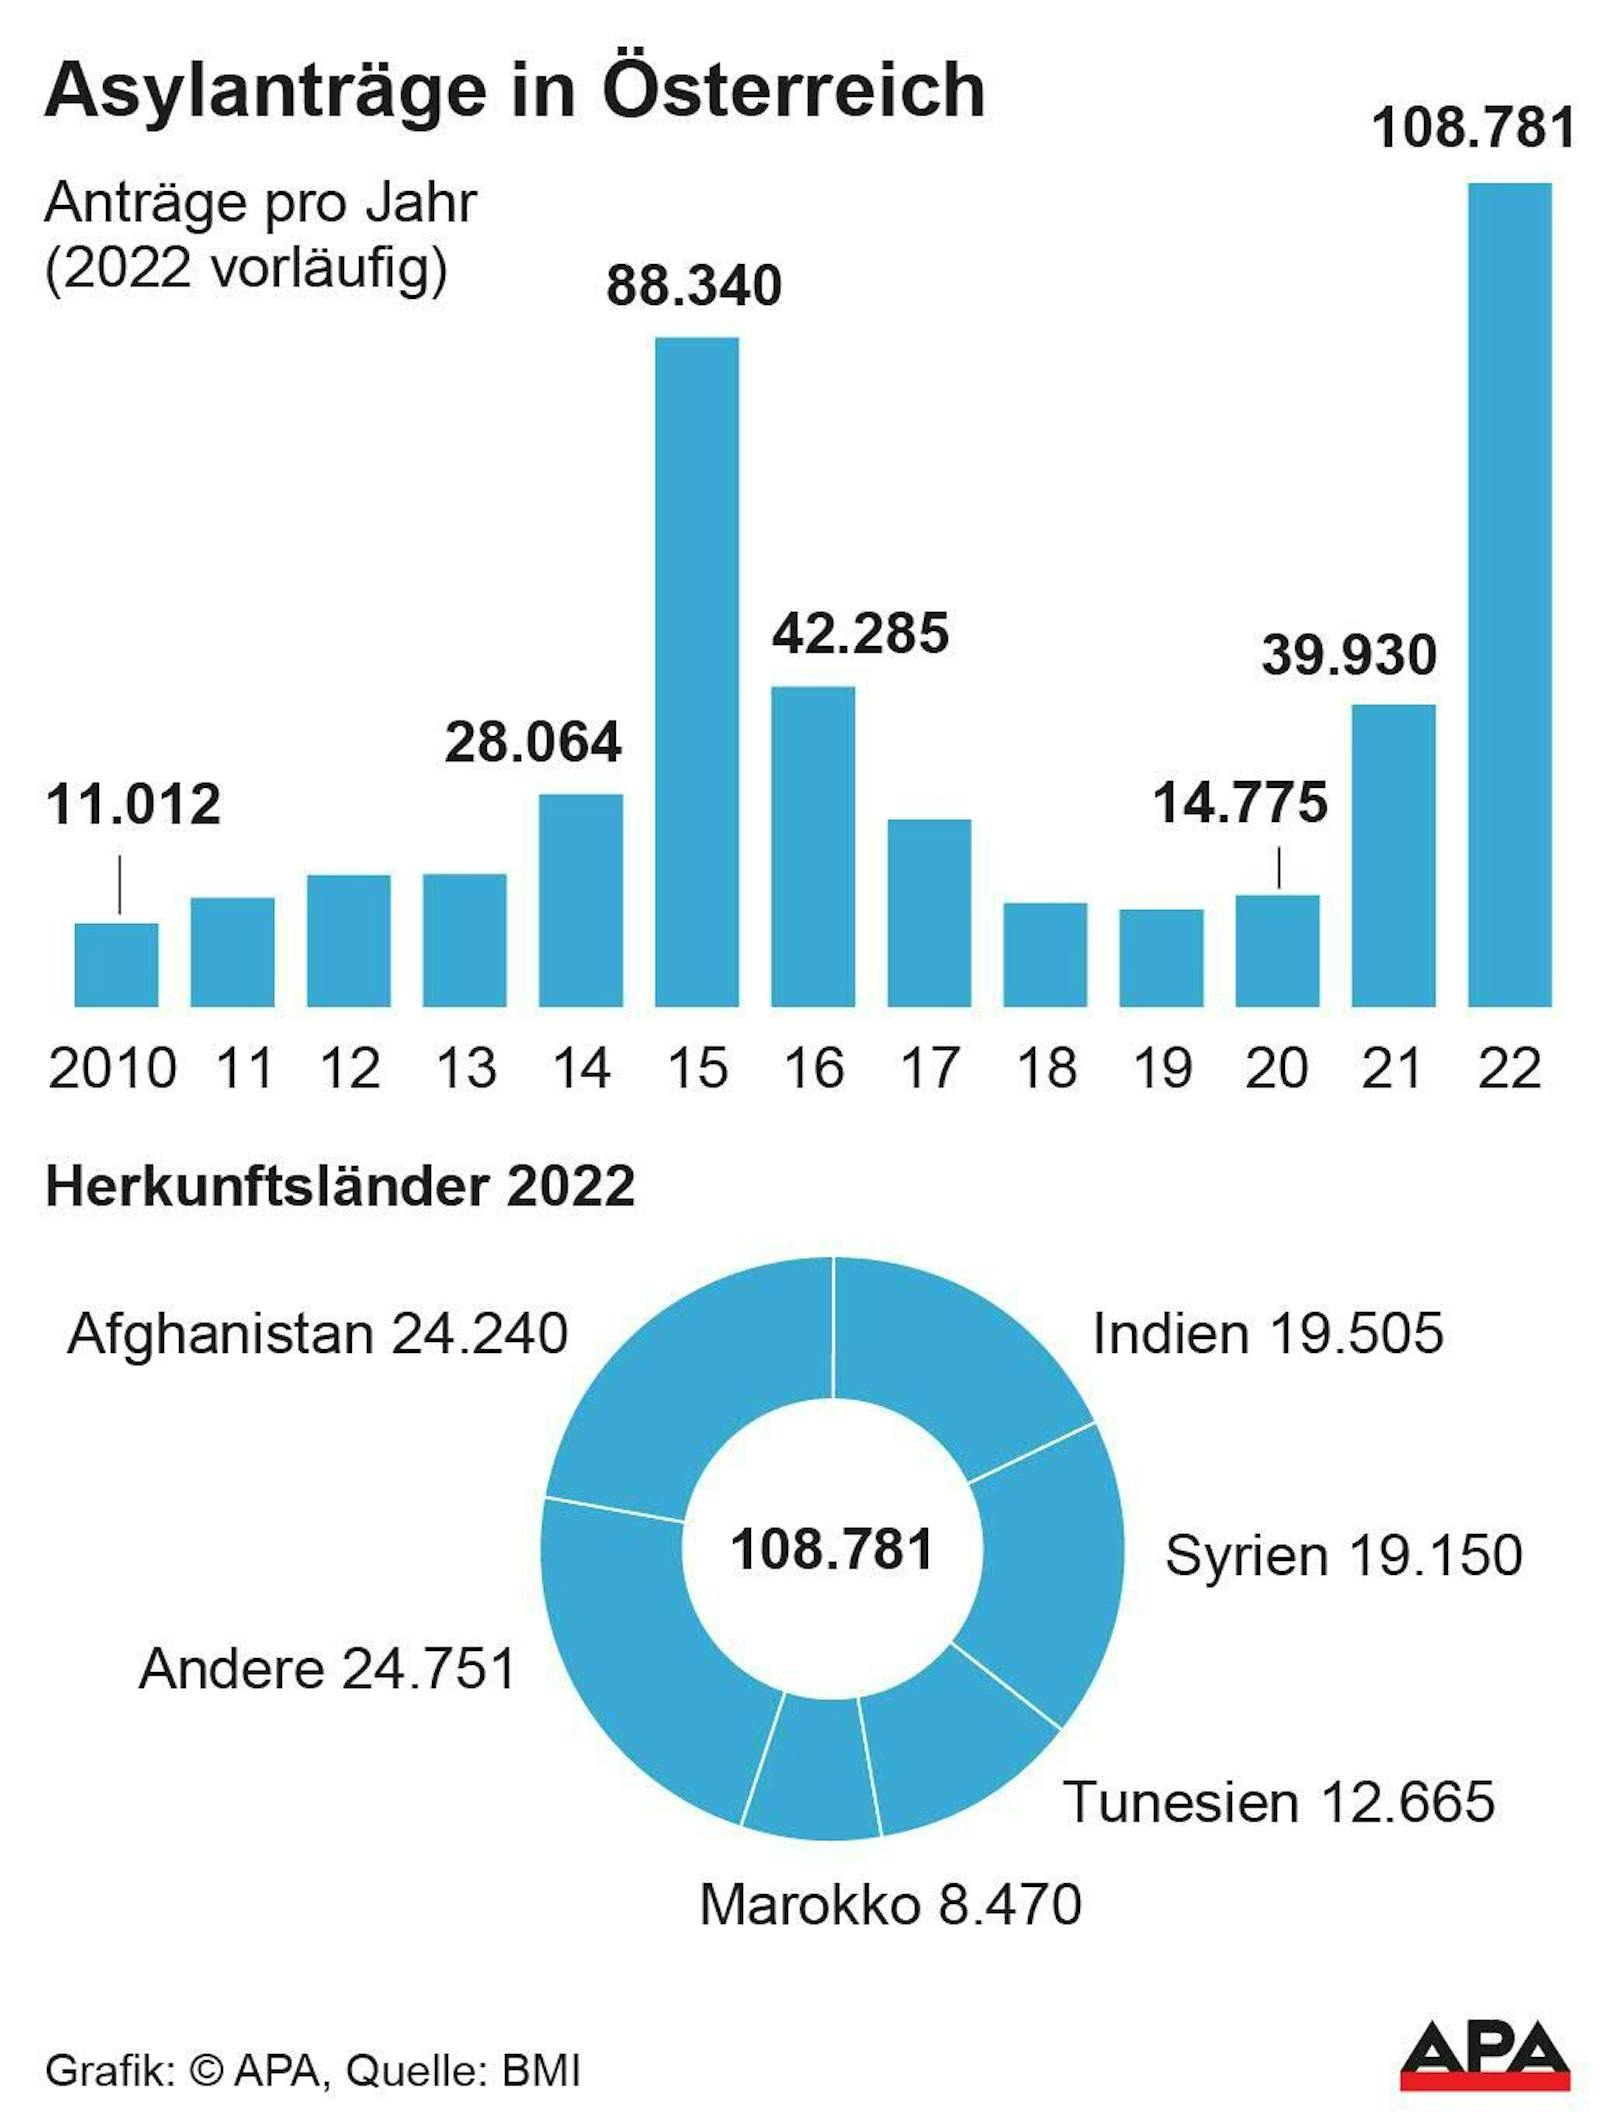 Asylanträge pro Jahr 2010-2022